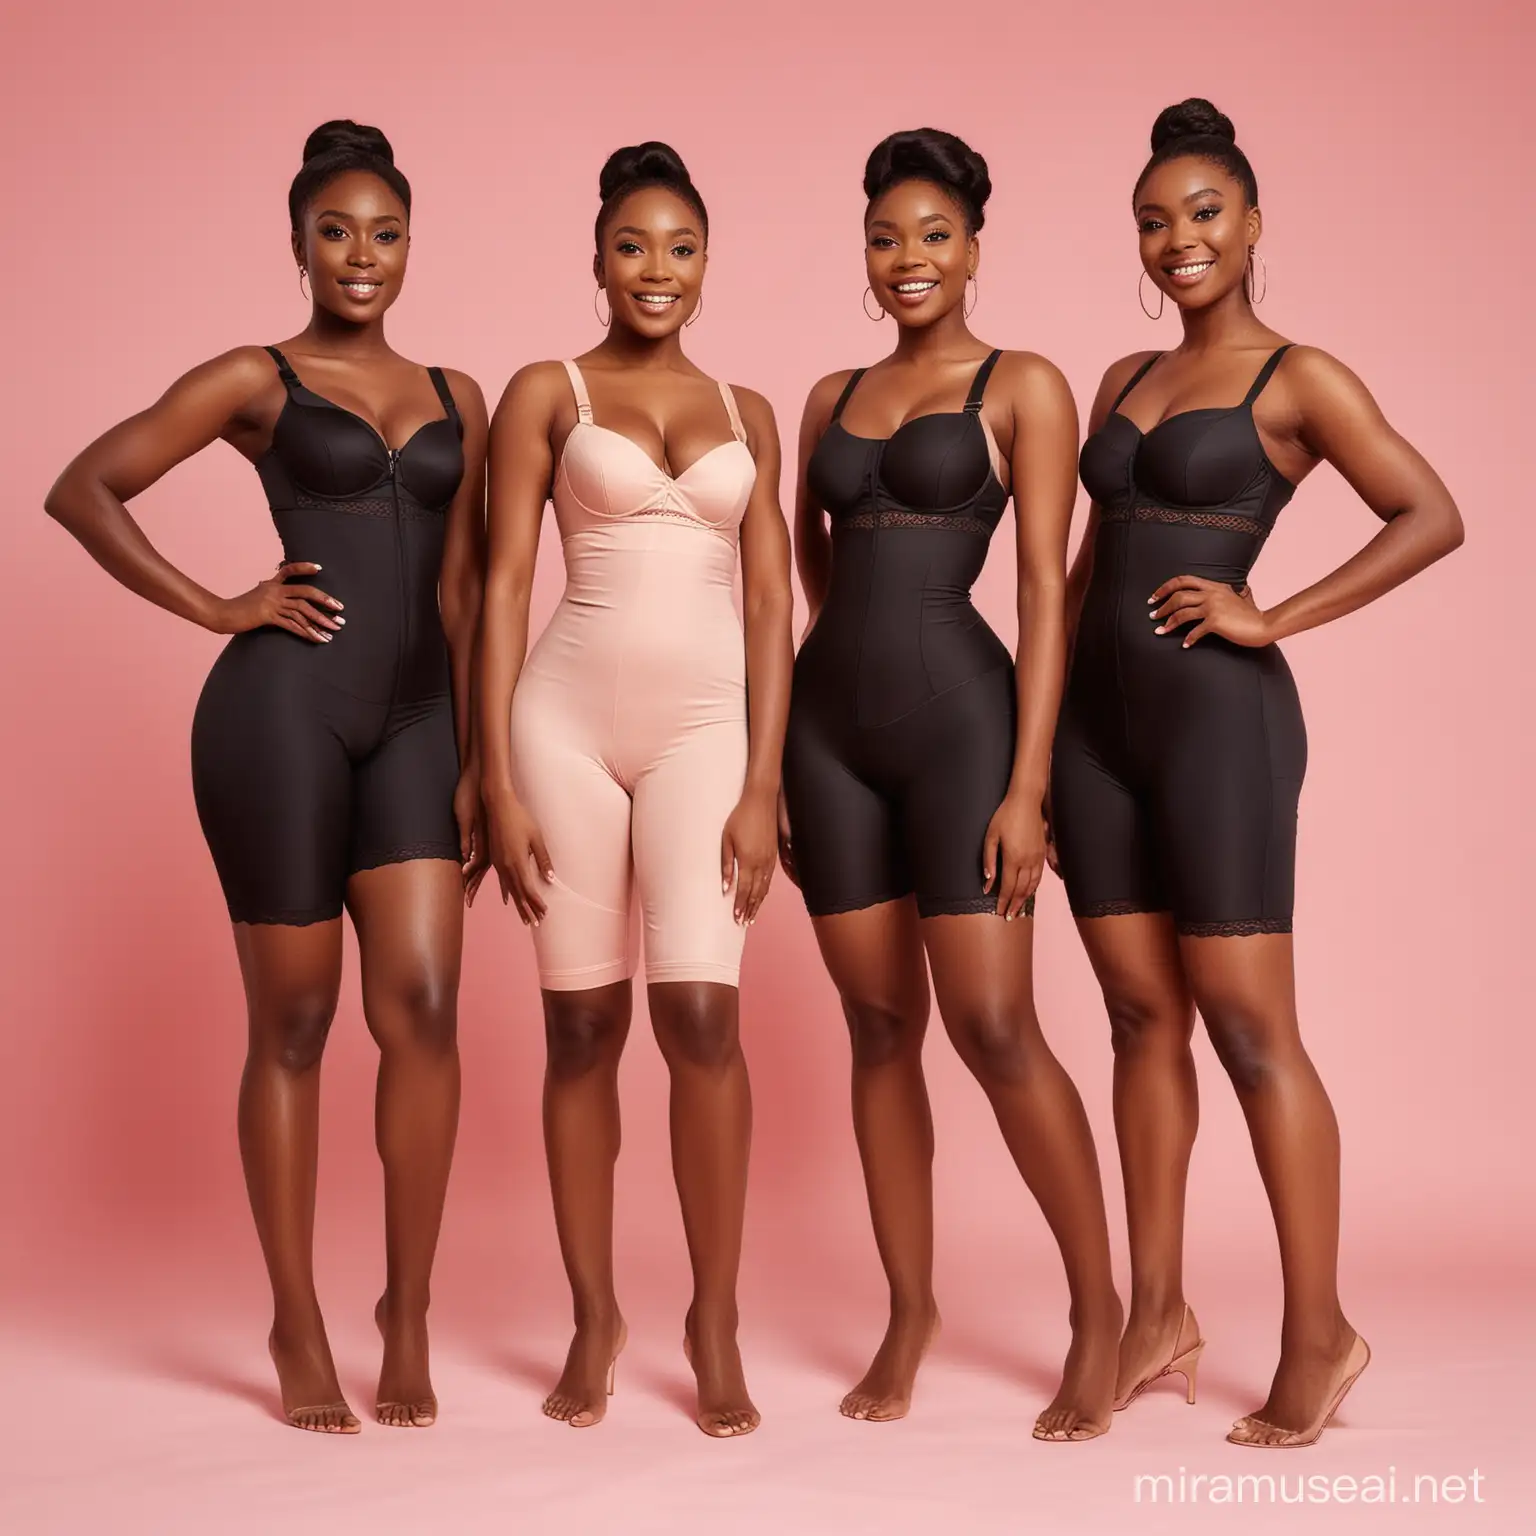 Four Nigerian Models in Black Faja Body Shapers on Pink Background